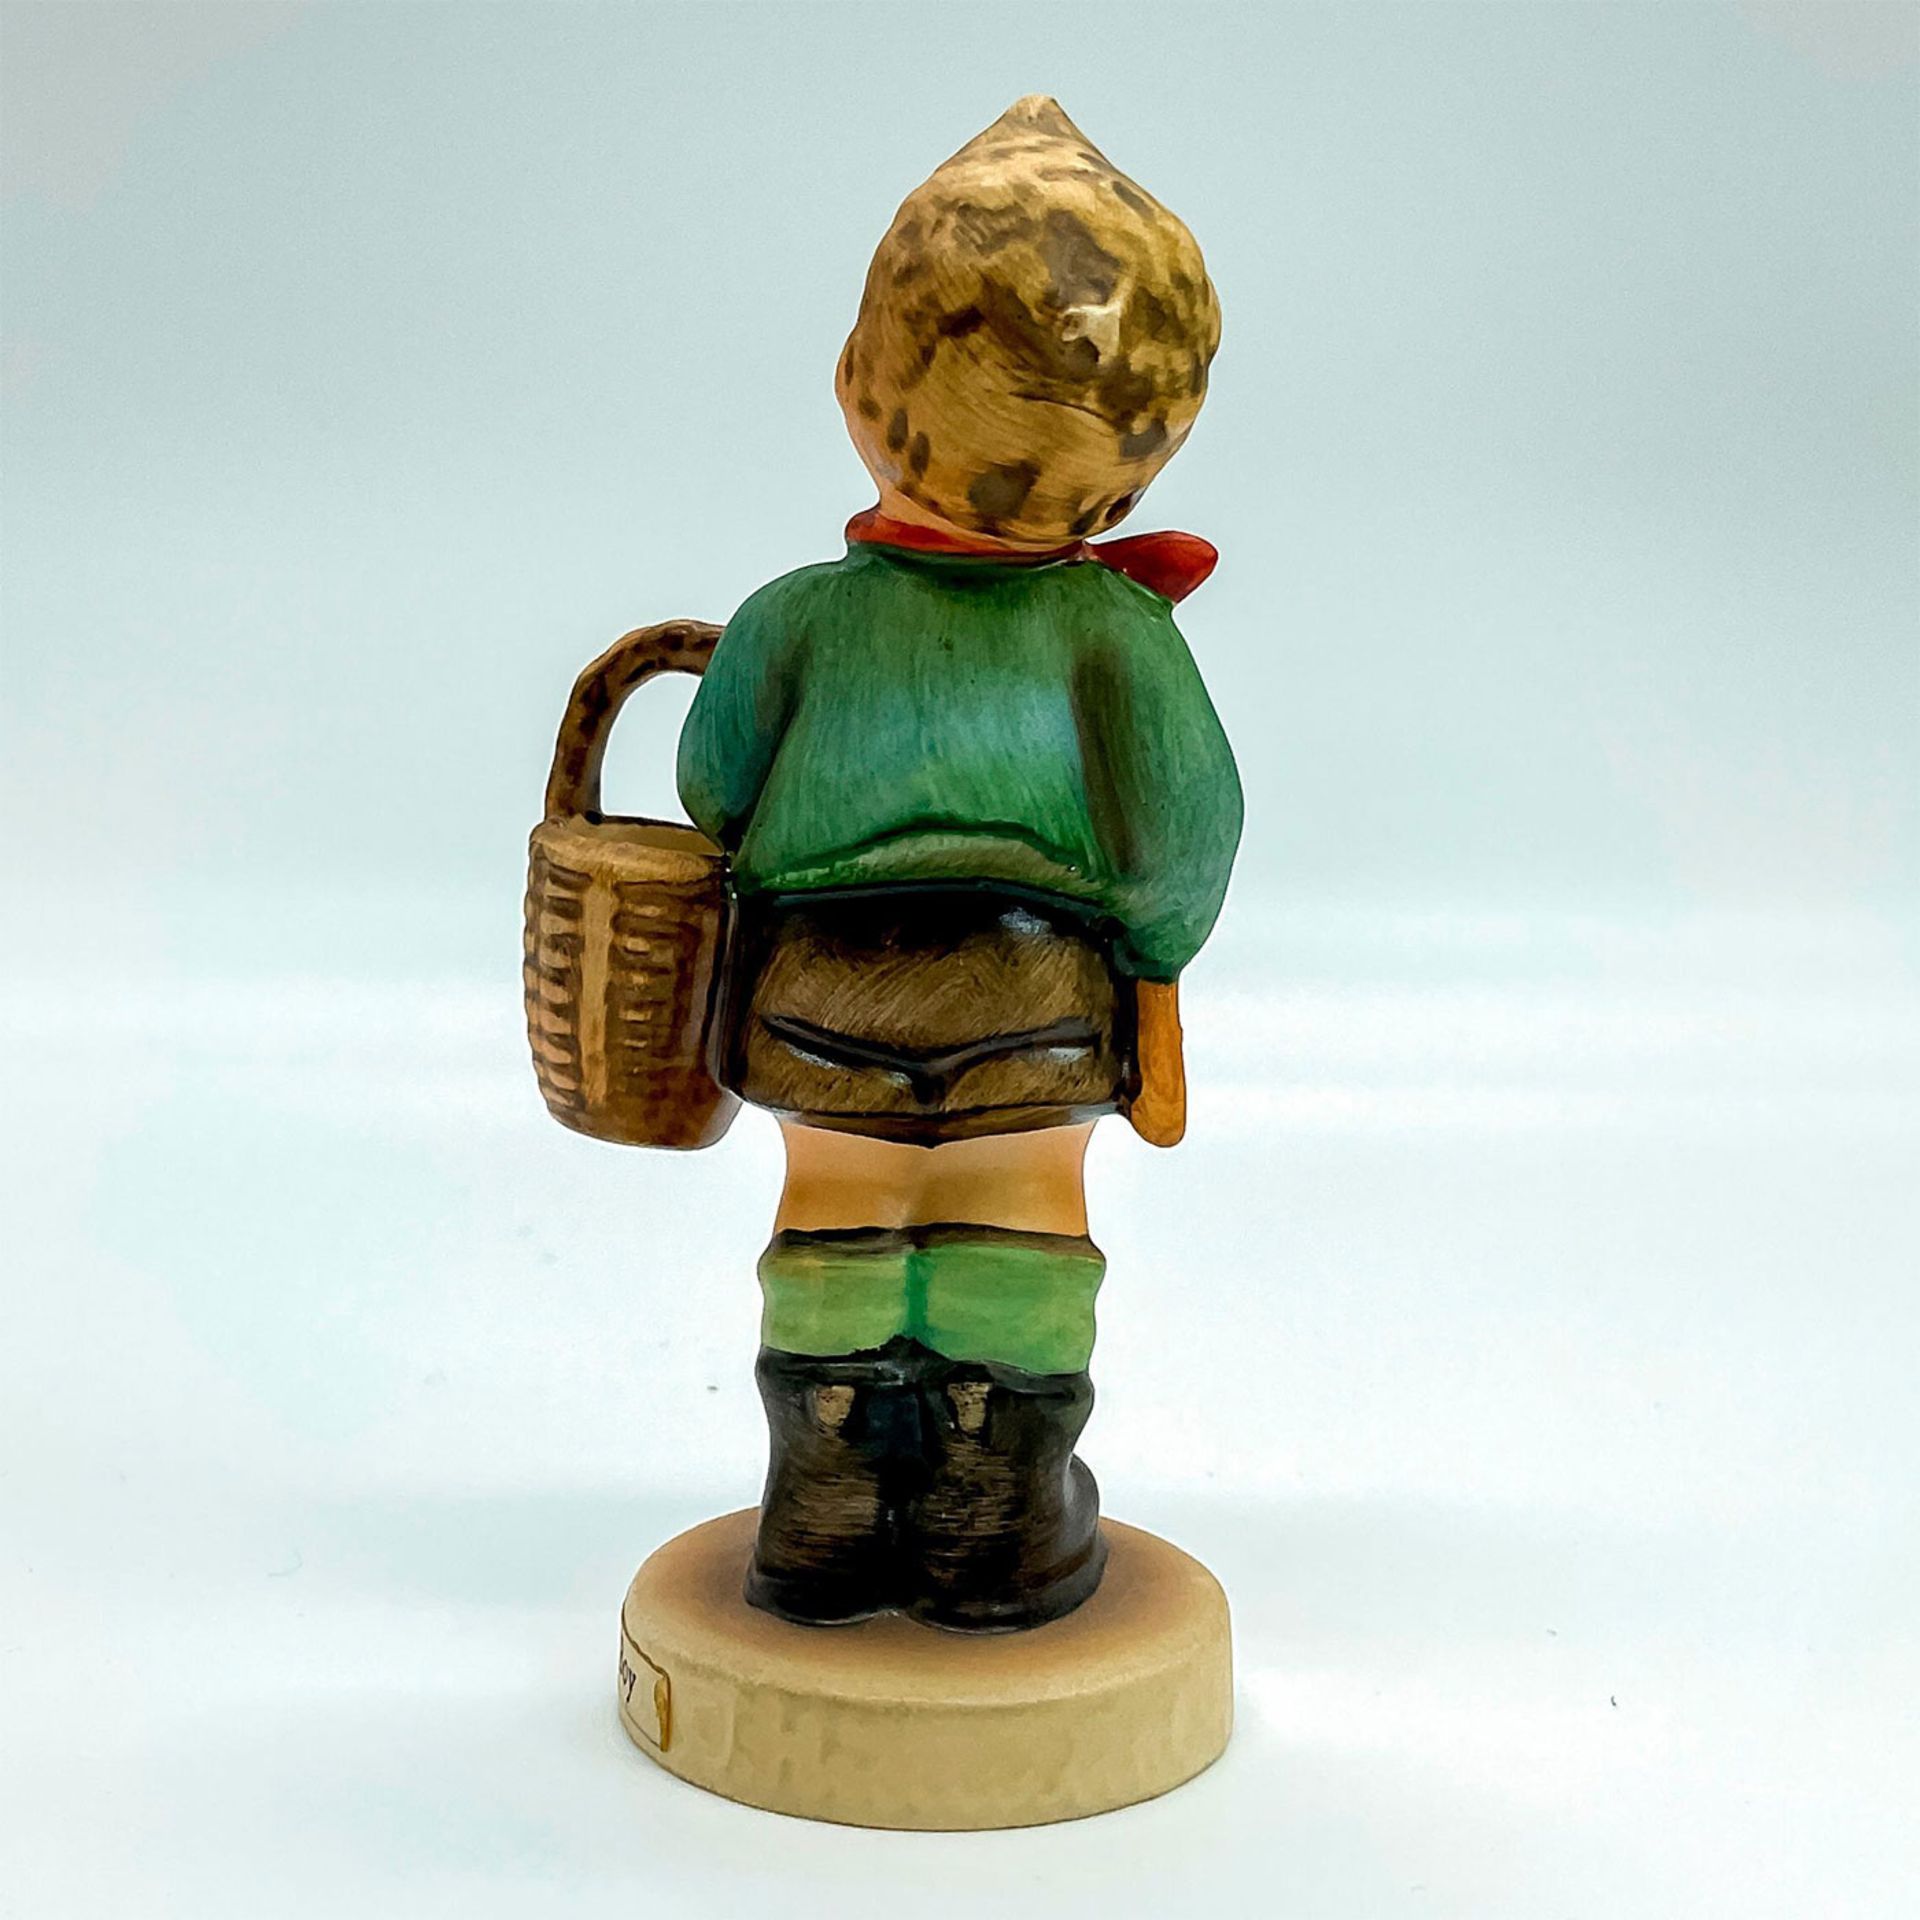 Goebel Hummel Figurine, Village Boy - Image 2 of 3